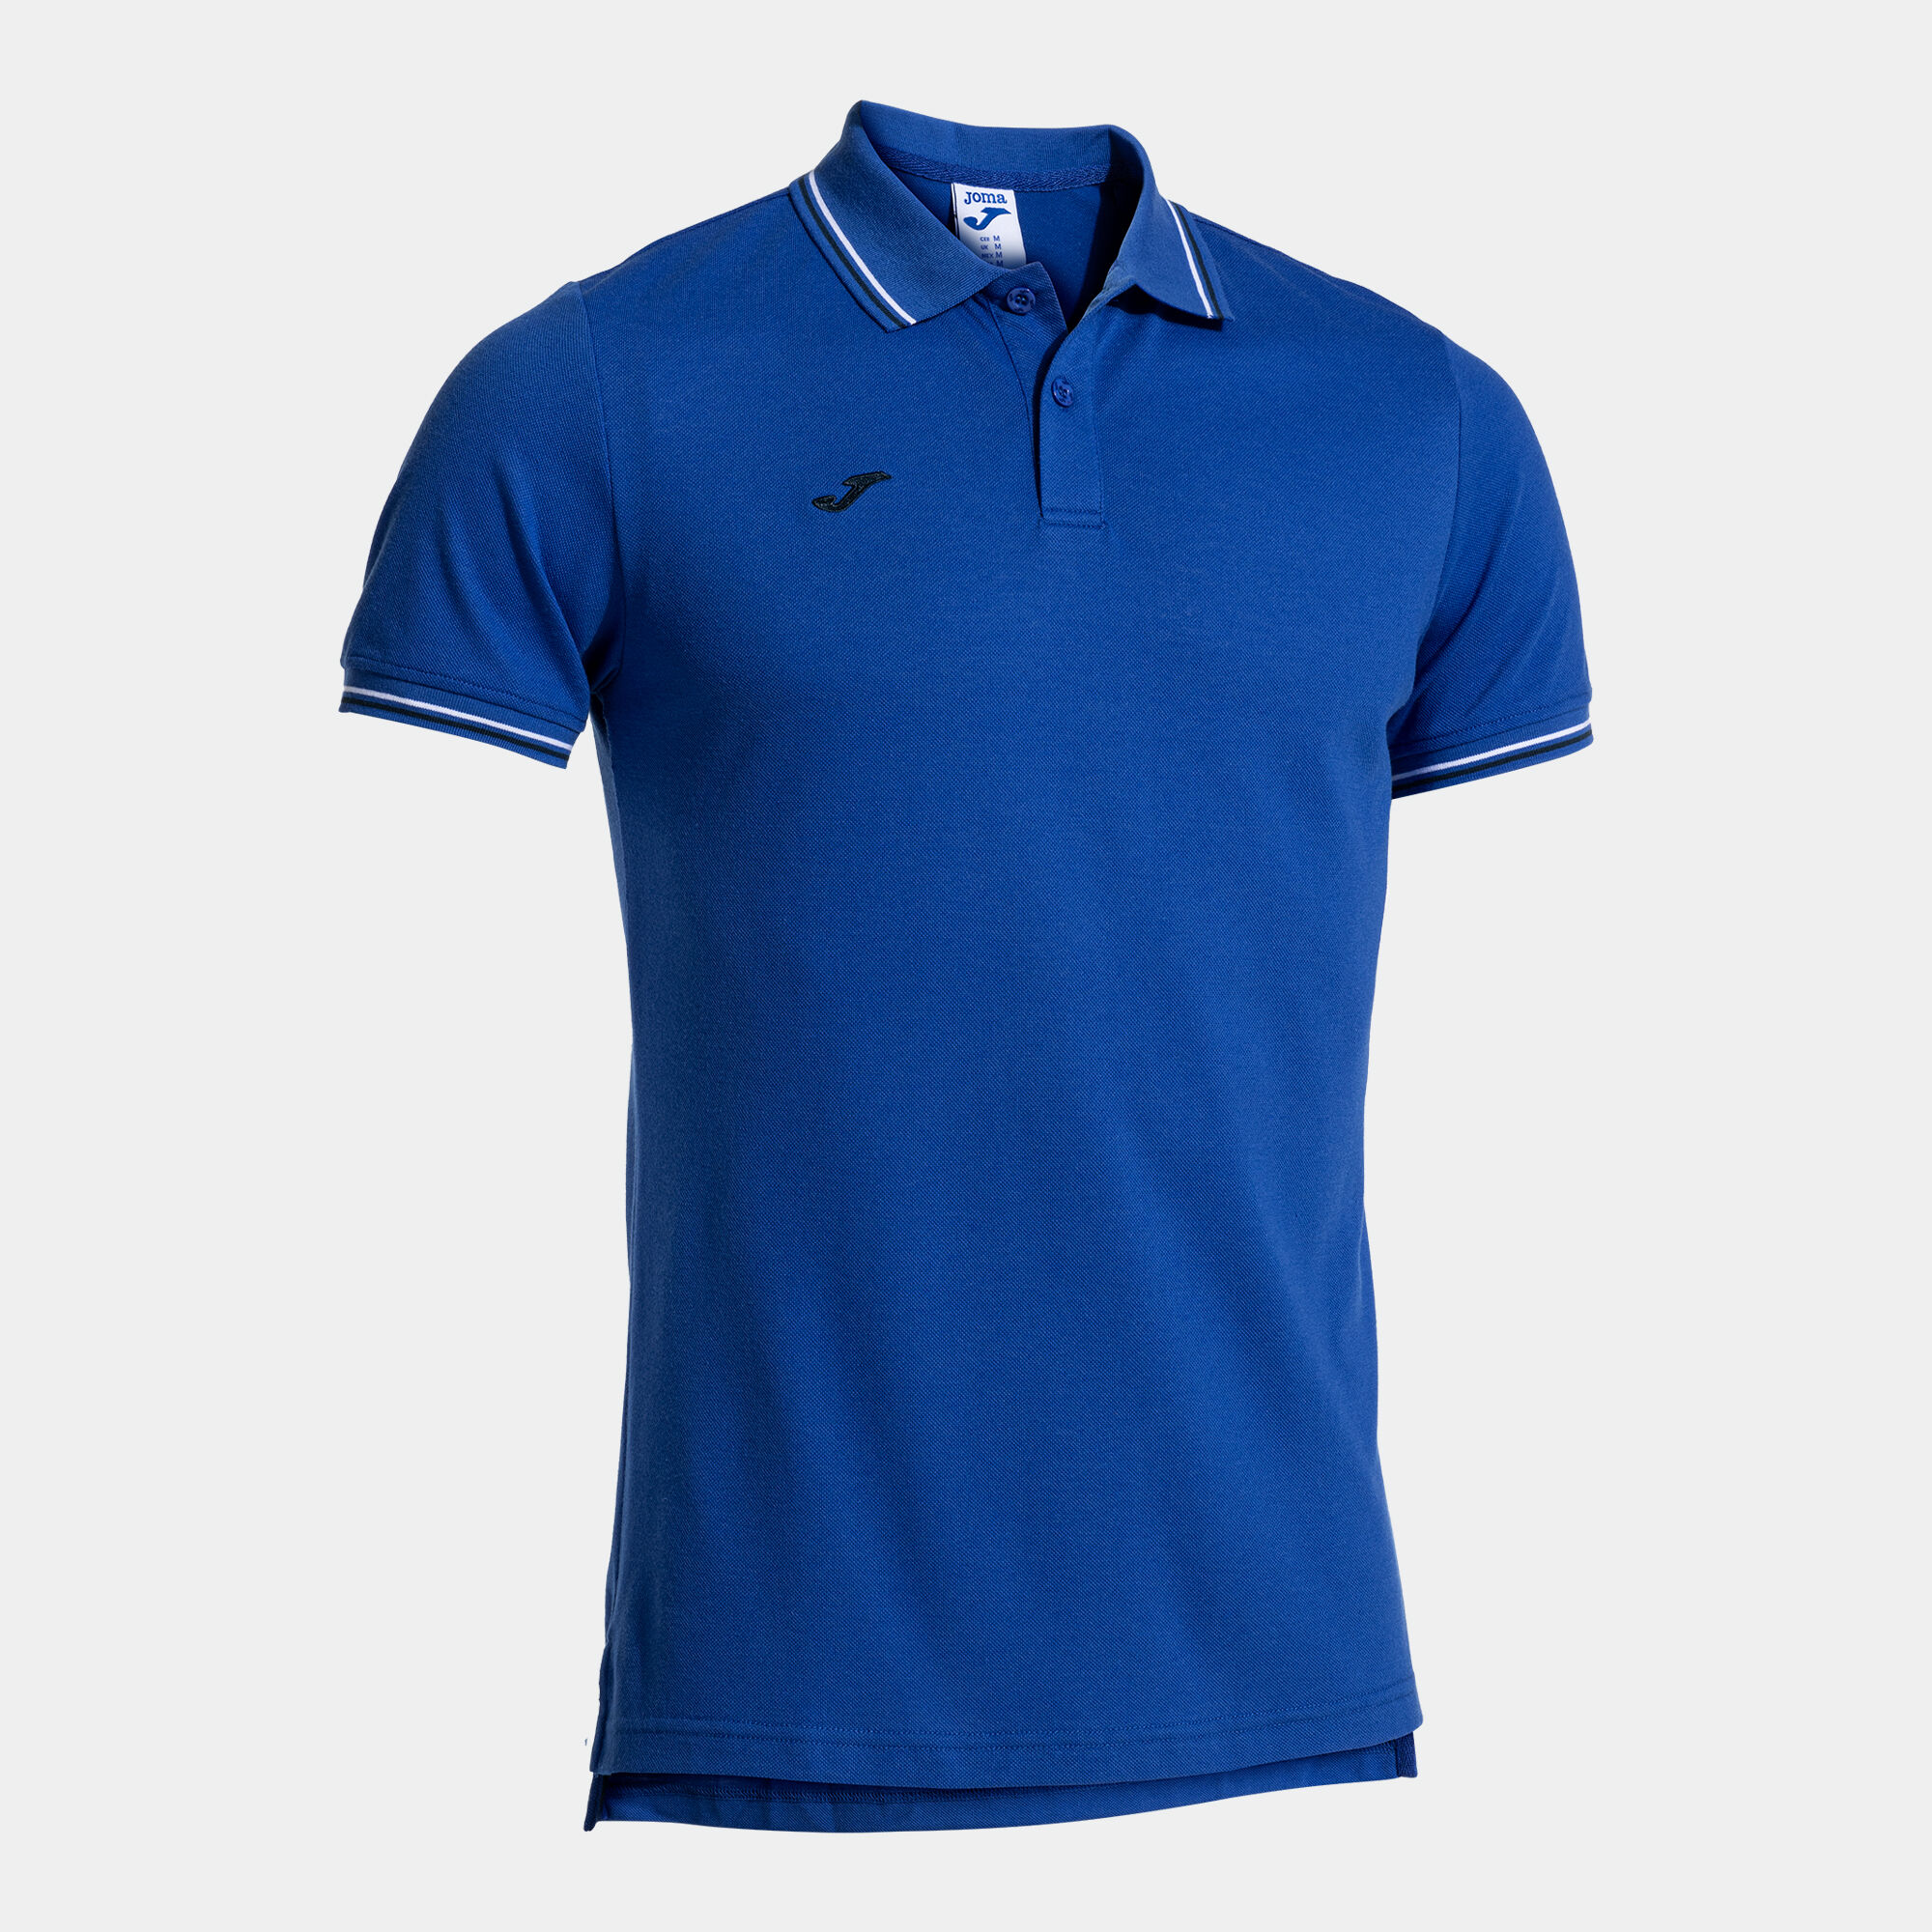 Polo shirt short-sleeve man Confort Classic royal blue navy blue